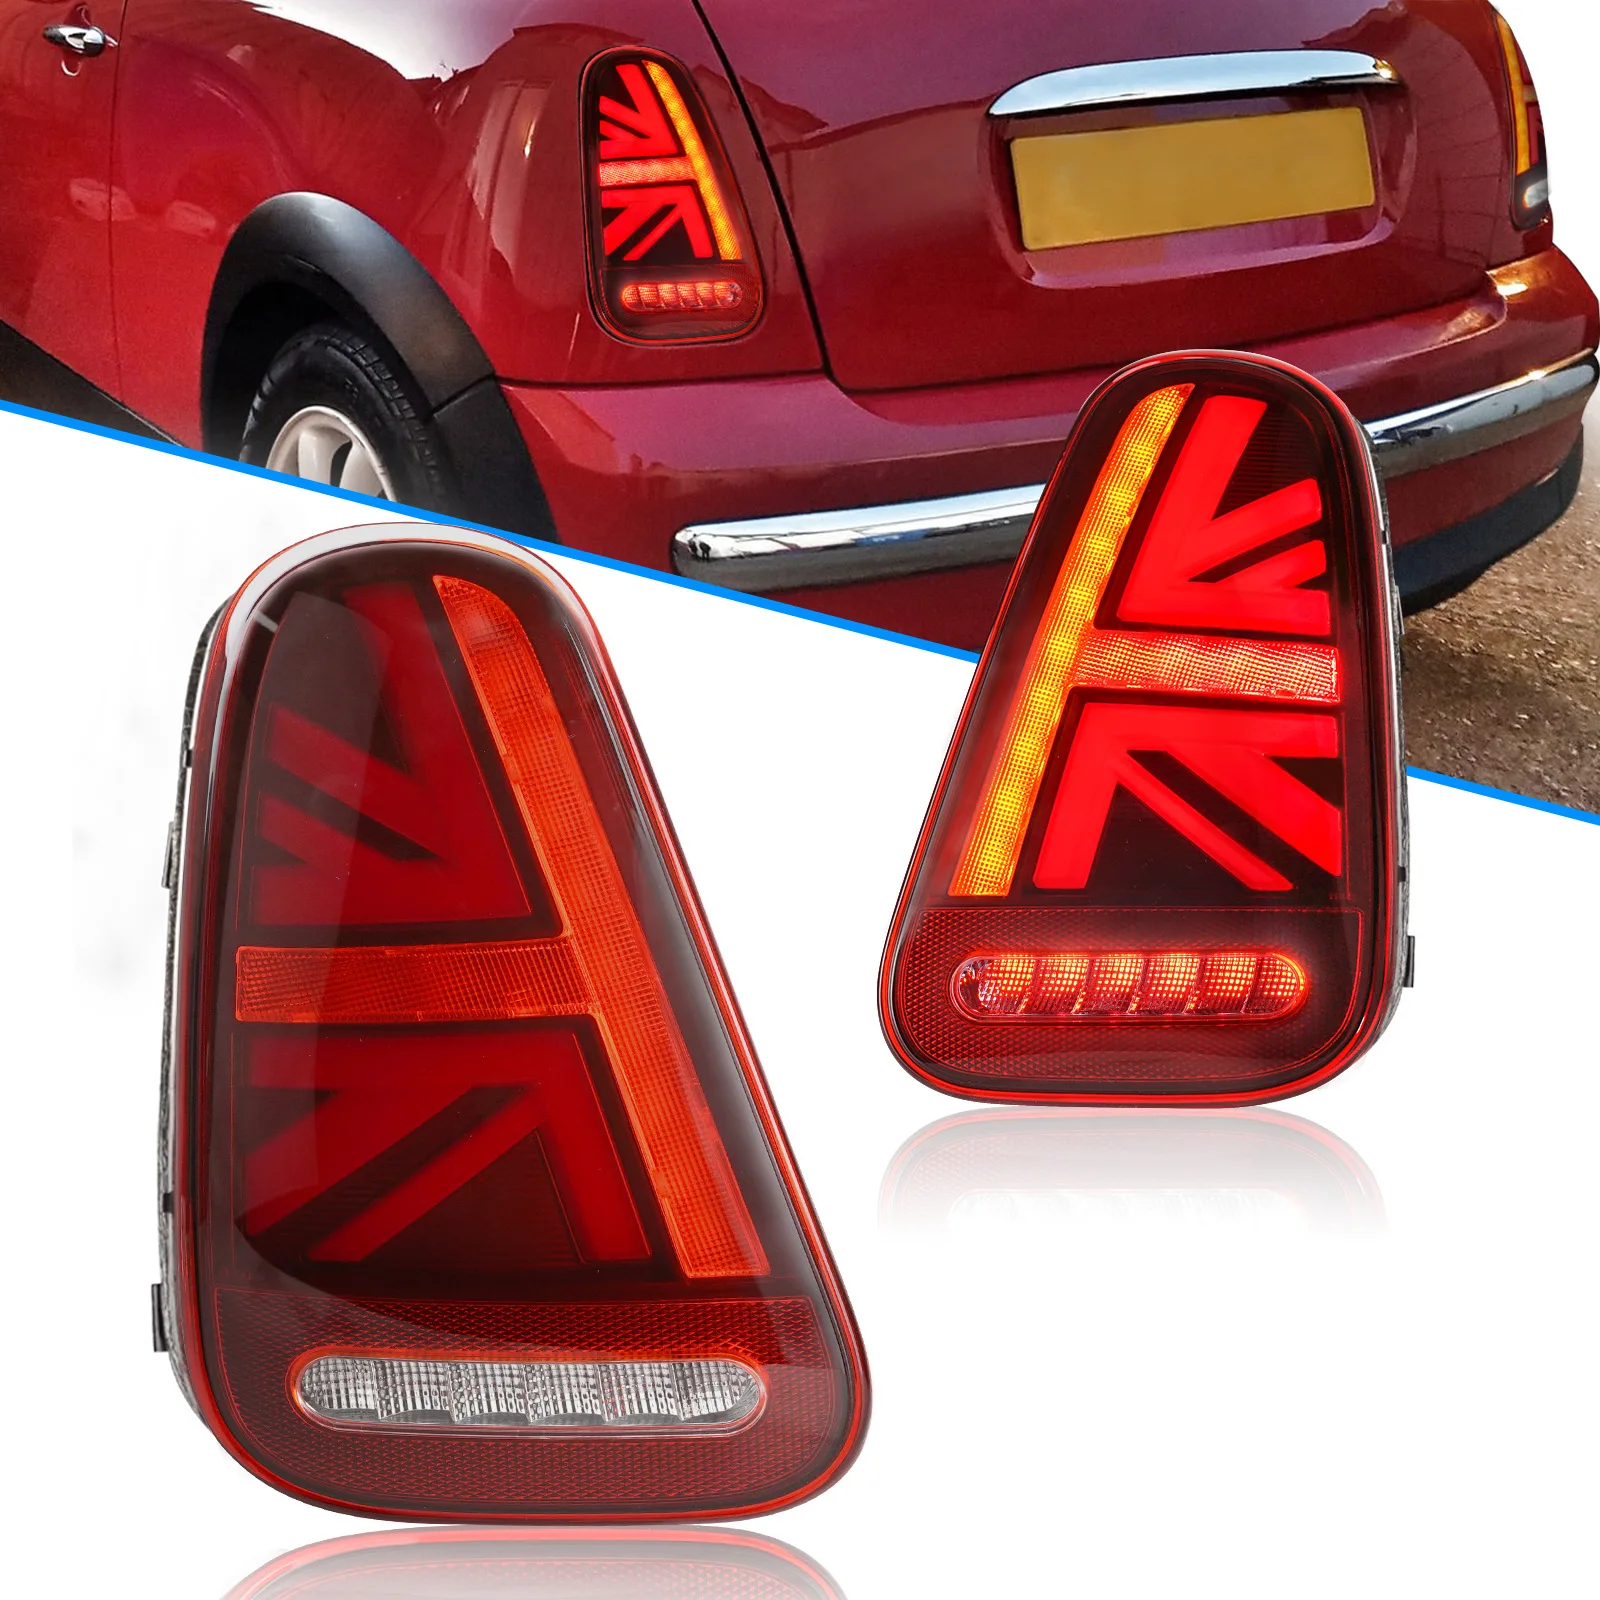 

LED Rear Stop Brake Tail Light Turn signal lights for BMW MINI R50 R52 2001 2002 2003 2004 2005 2006 2007